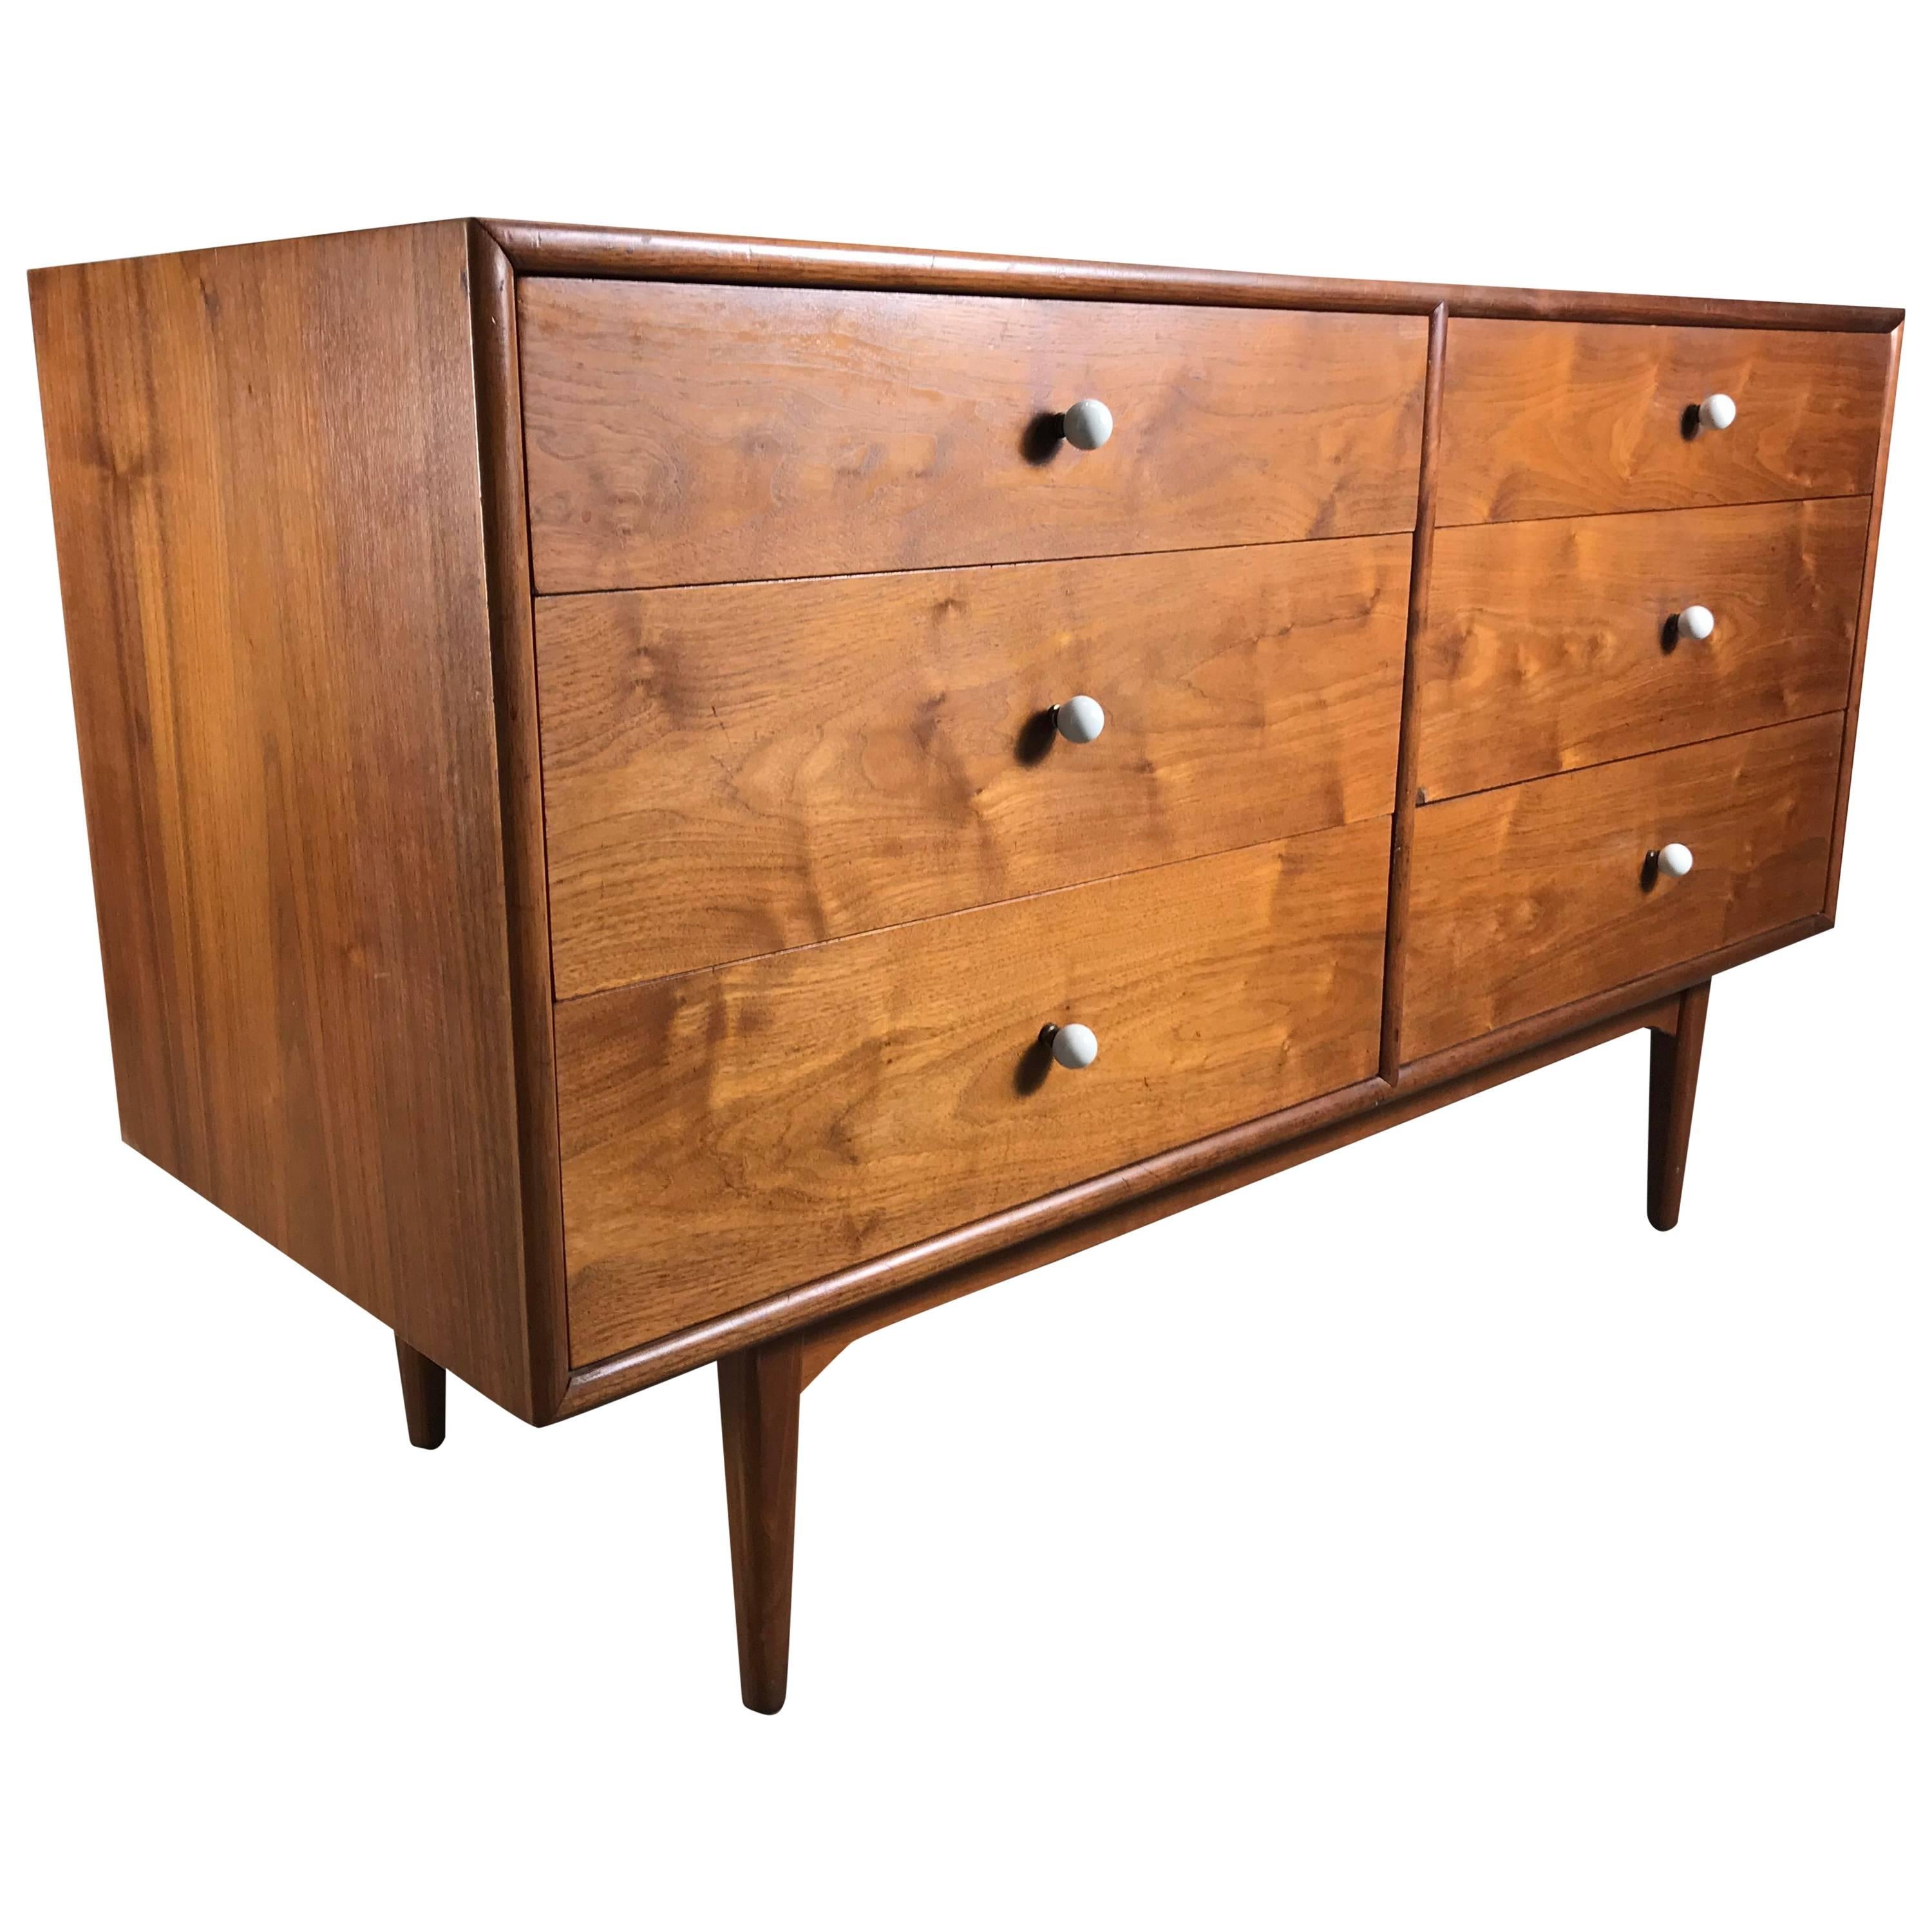 Mid-Century Modern Six-Drawer Dresser by Kipp Stewart for Drexel